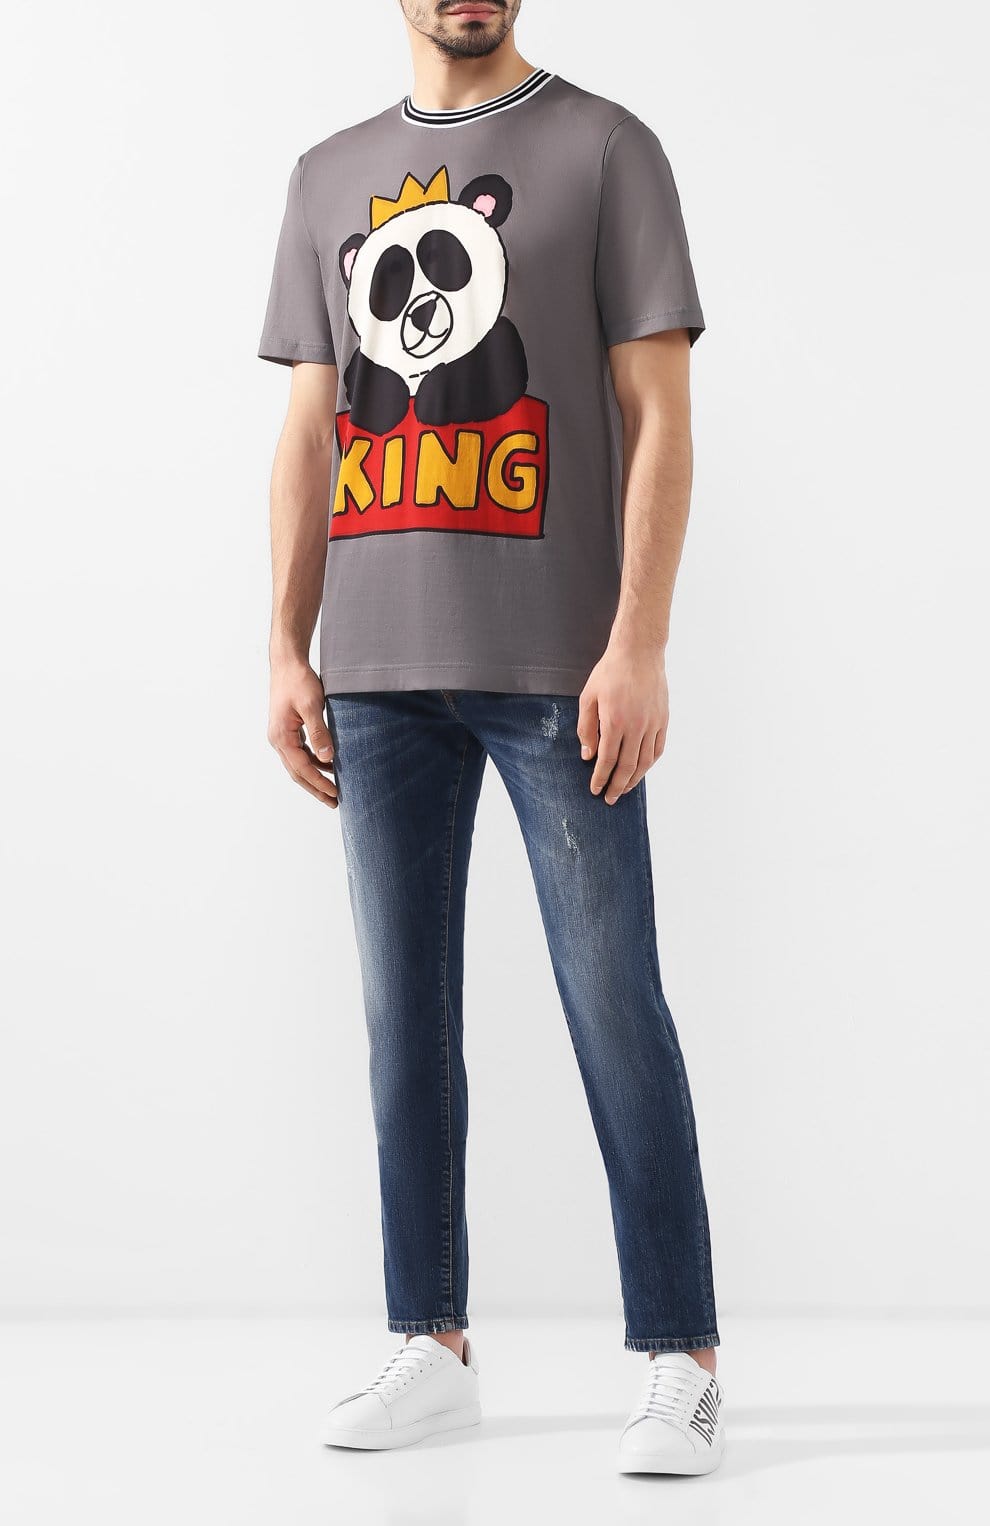 Dolce & Gabbana Panda King Print T-Shirt